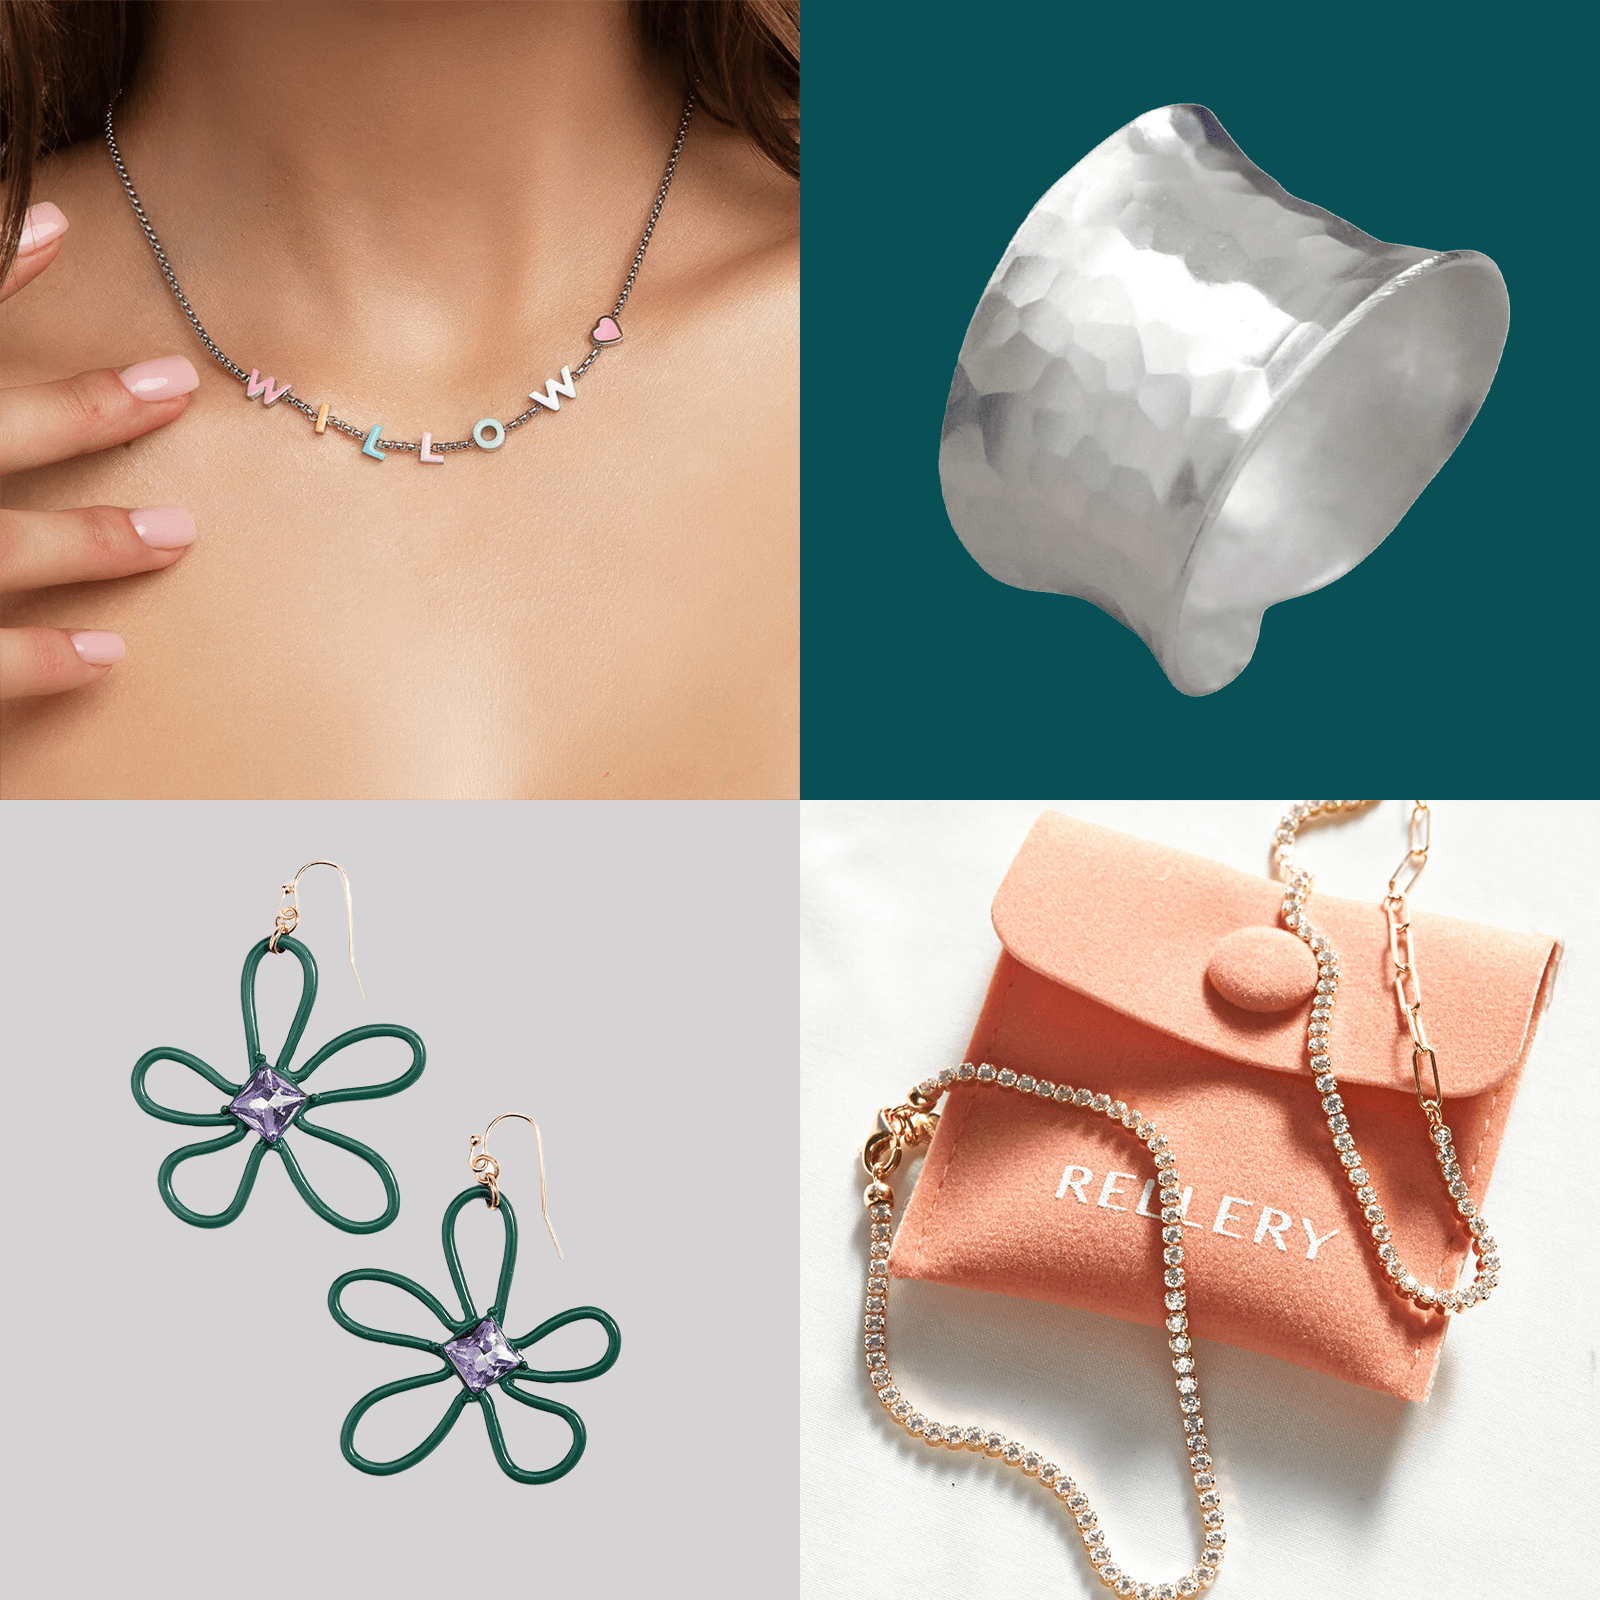 Make Custom Pearl Jewelry Part of Your Wardrobe